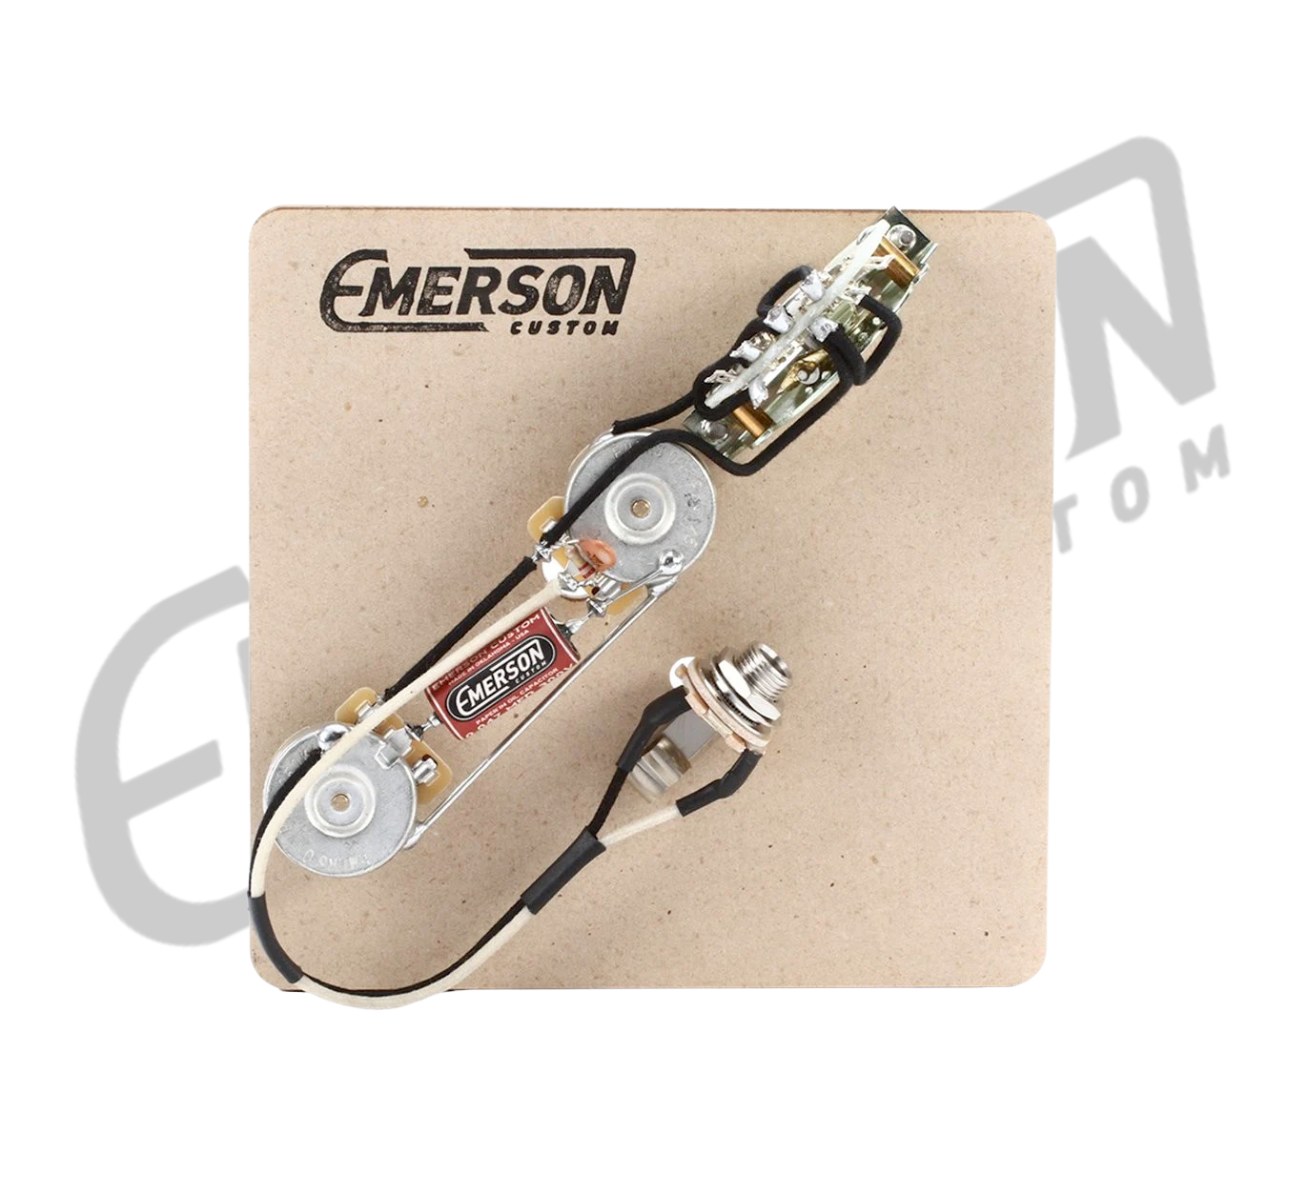 Emerson Custom 4-way Prewired Kit for Telecaster Guitars - 500k Pots